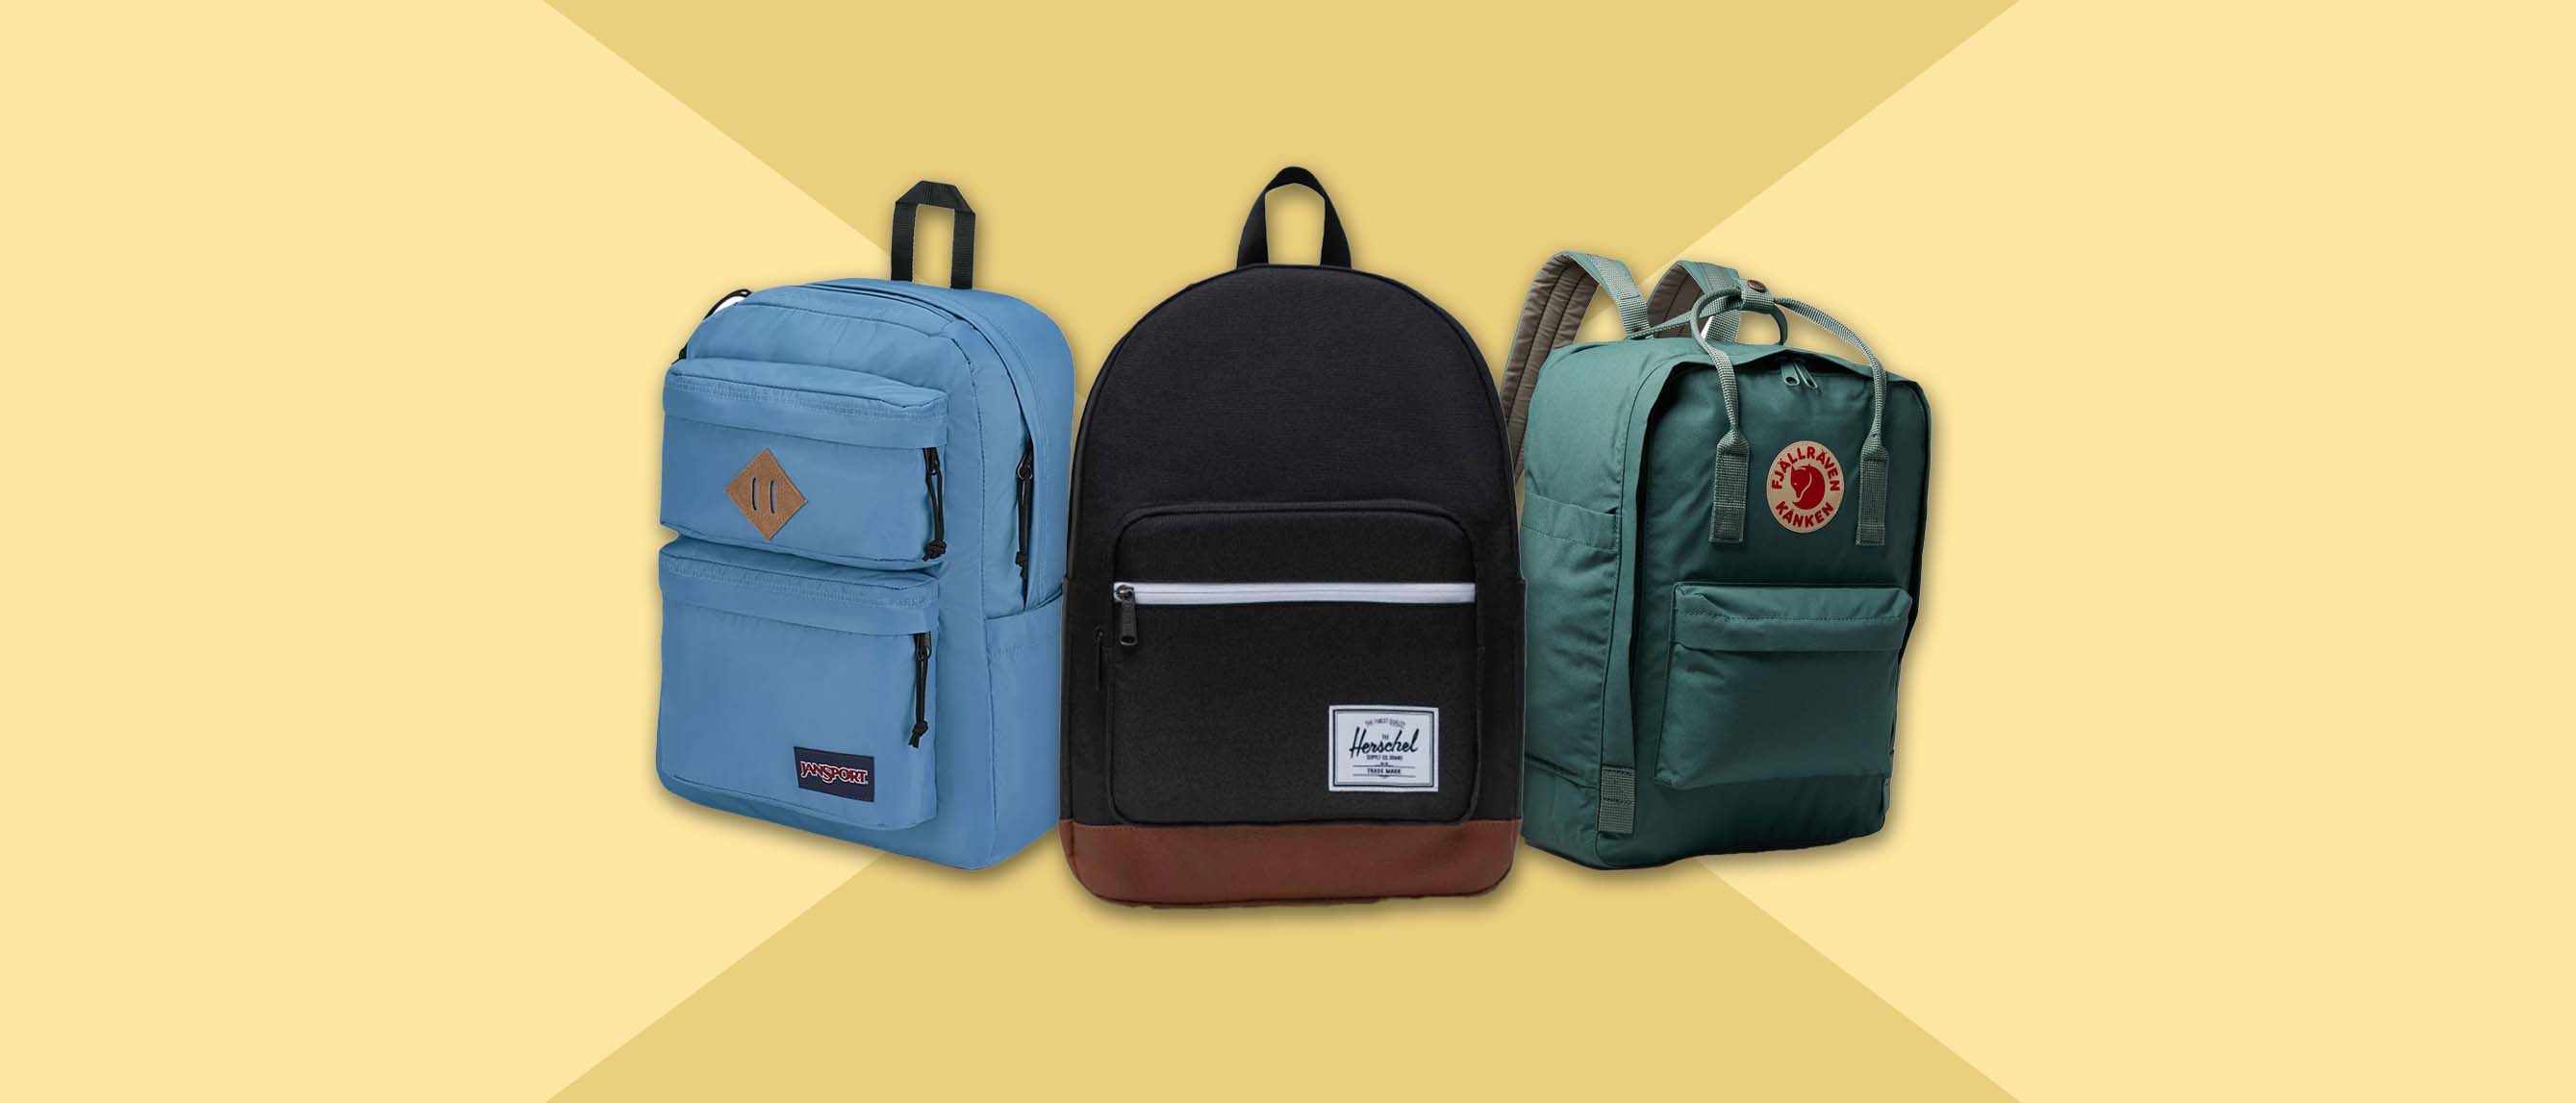 Image of three backpacks